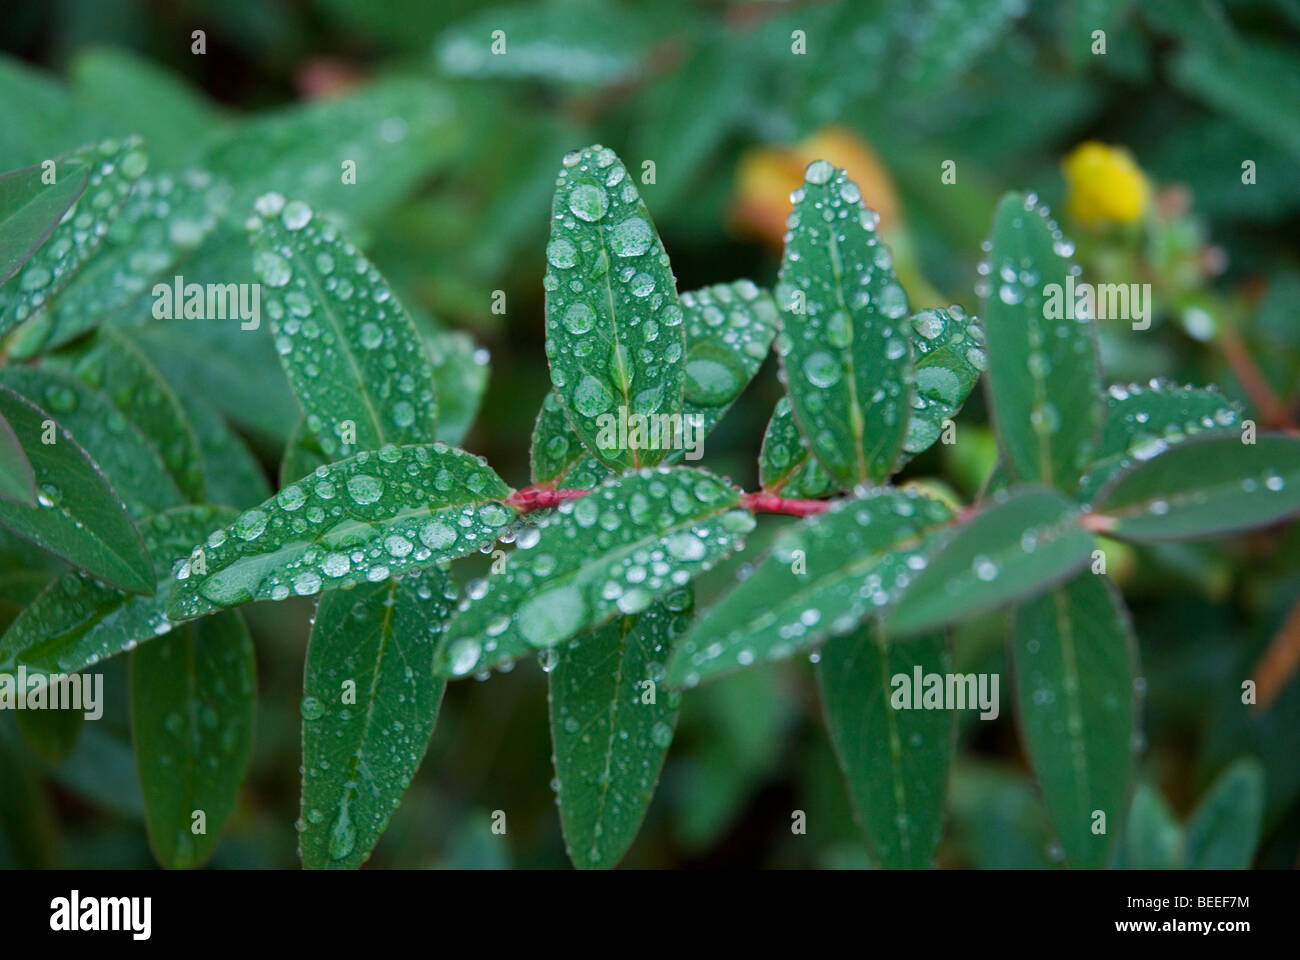 rain drops on waxy green leaves Stock Photo